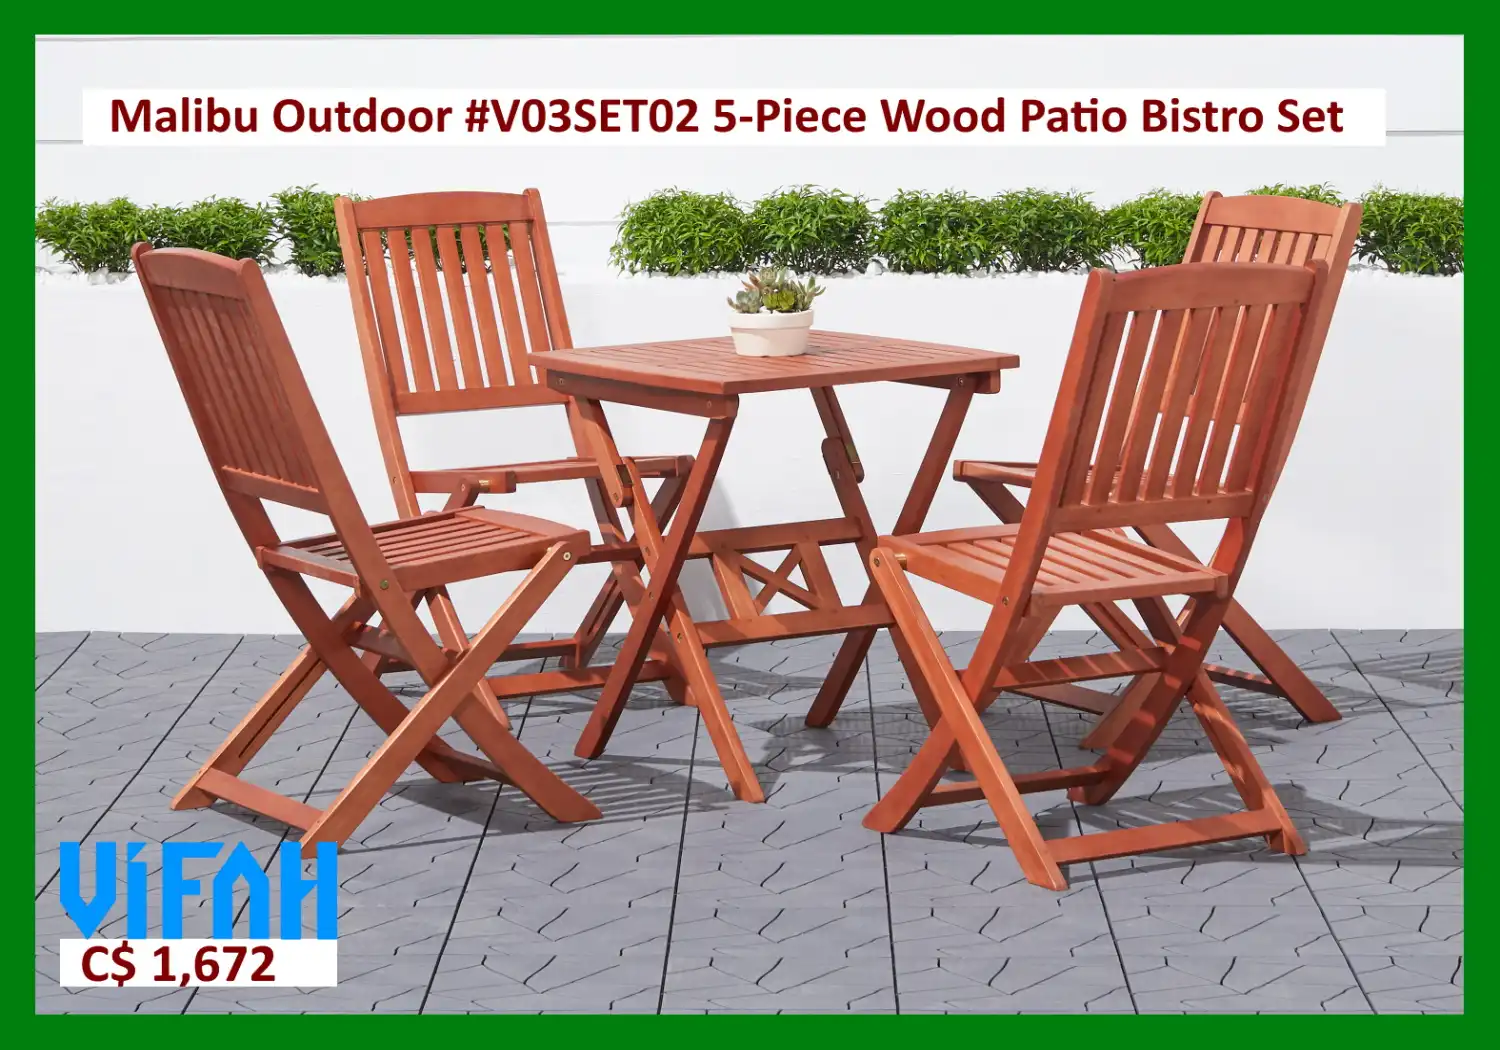 MALIBU Outdoor #V03SET02 5-Piece Wood Patio Bistro Set